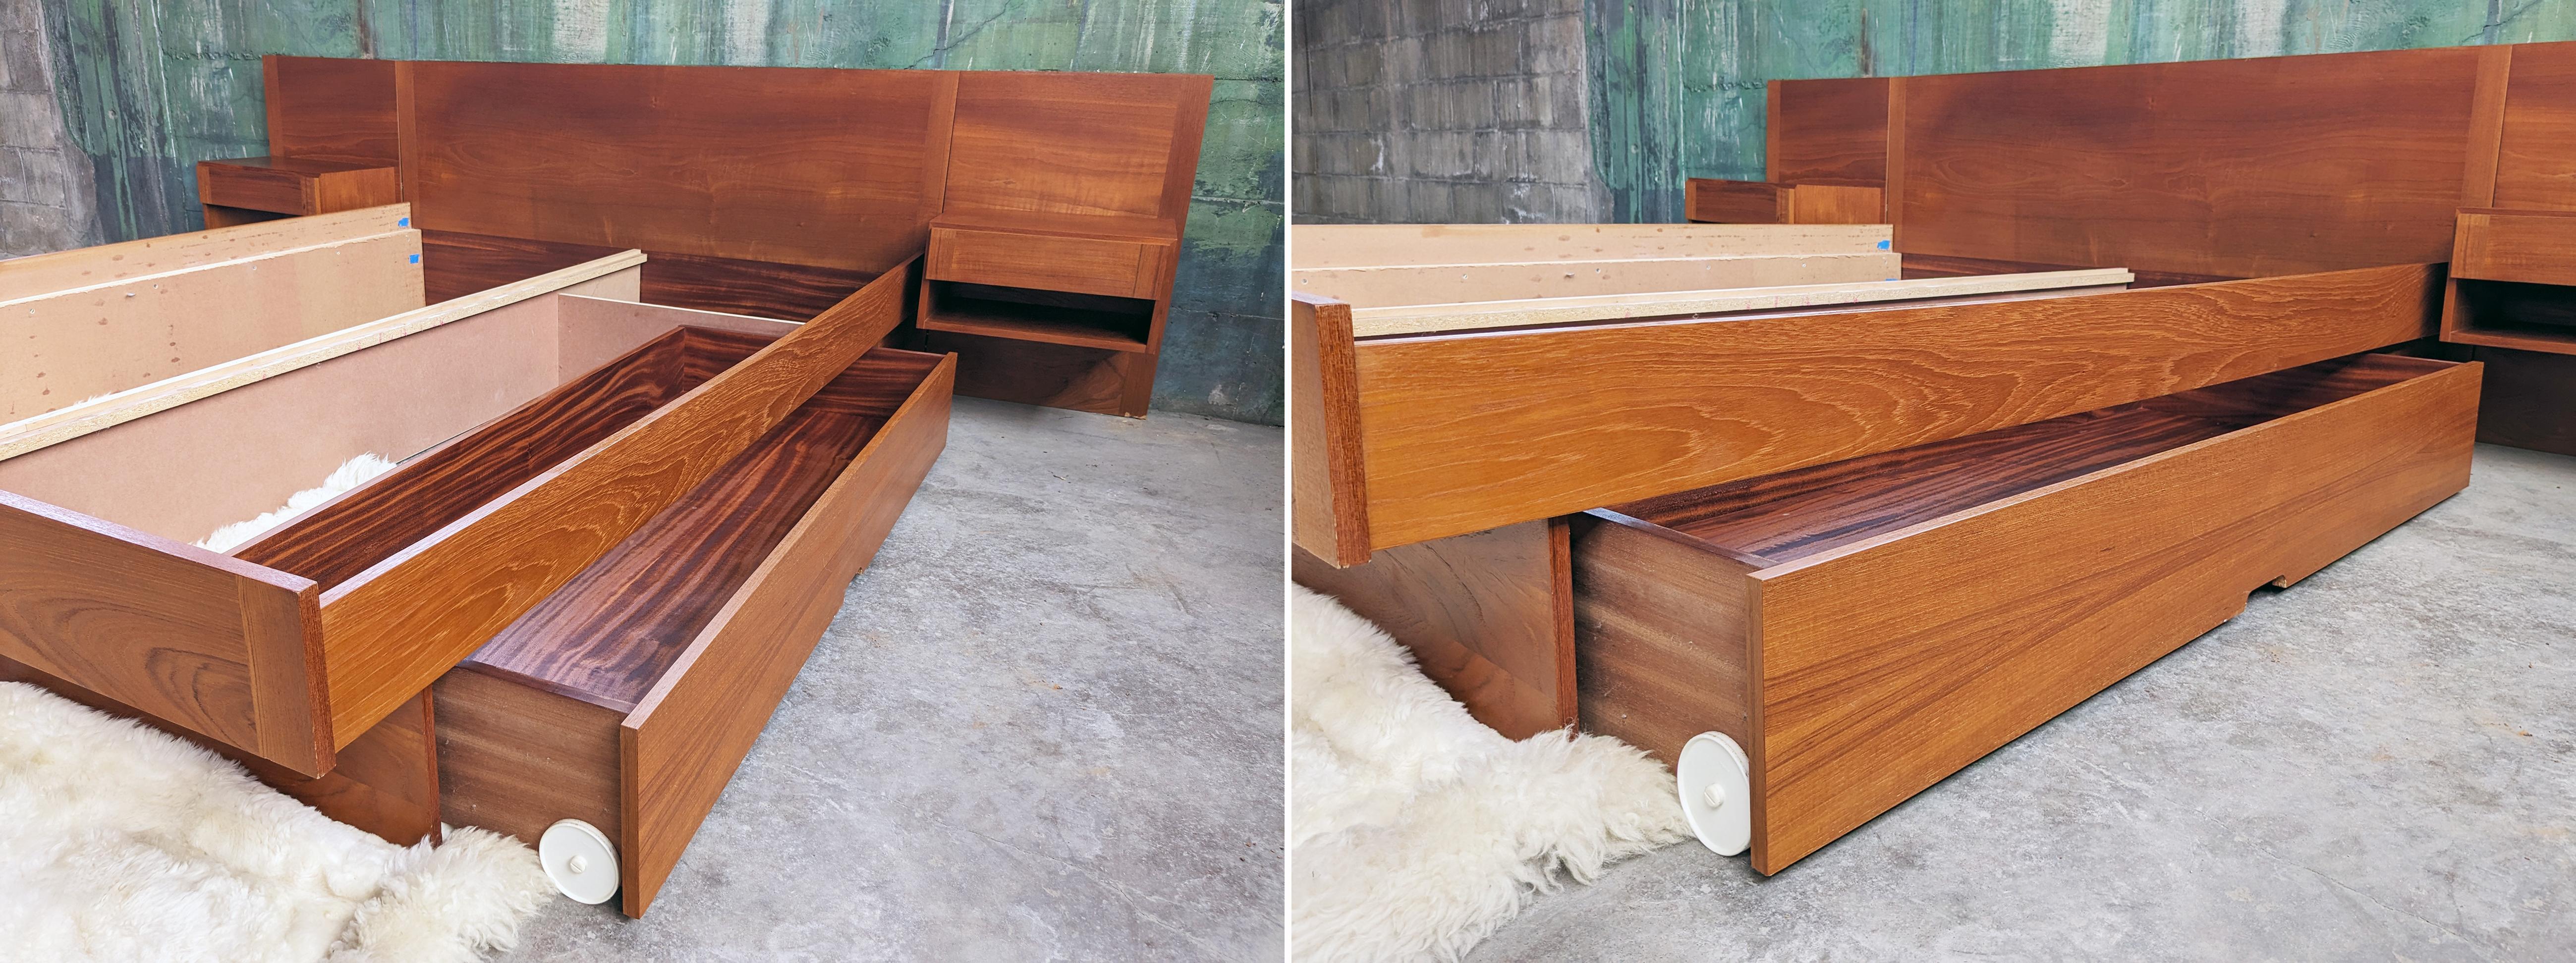 1960s Danish Modern Mid Century Teak Queen Bed With Attached Storage Nightstands 1